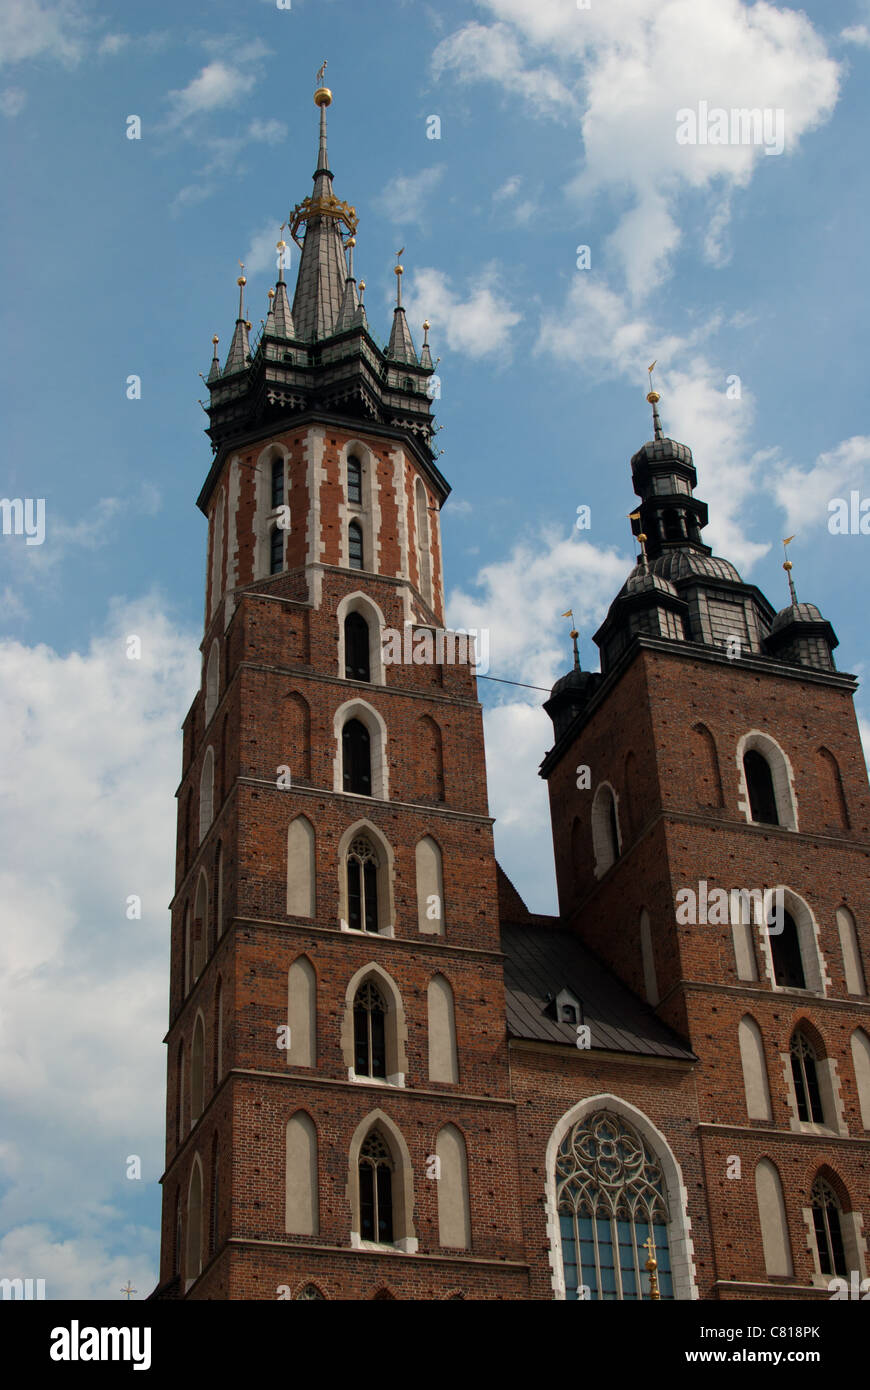 Kosciol Mariacki - St Marys Church - close-up of towers Poland Stock Photo